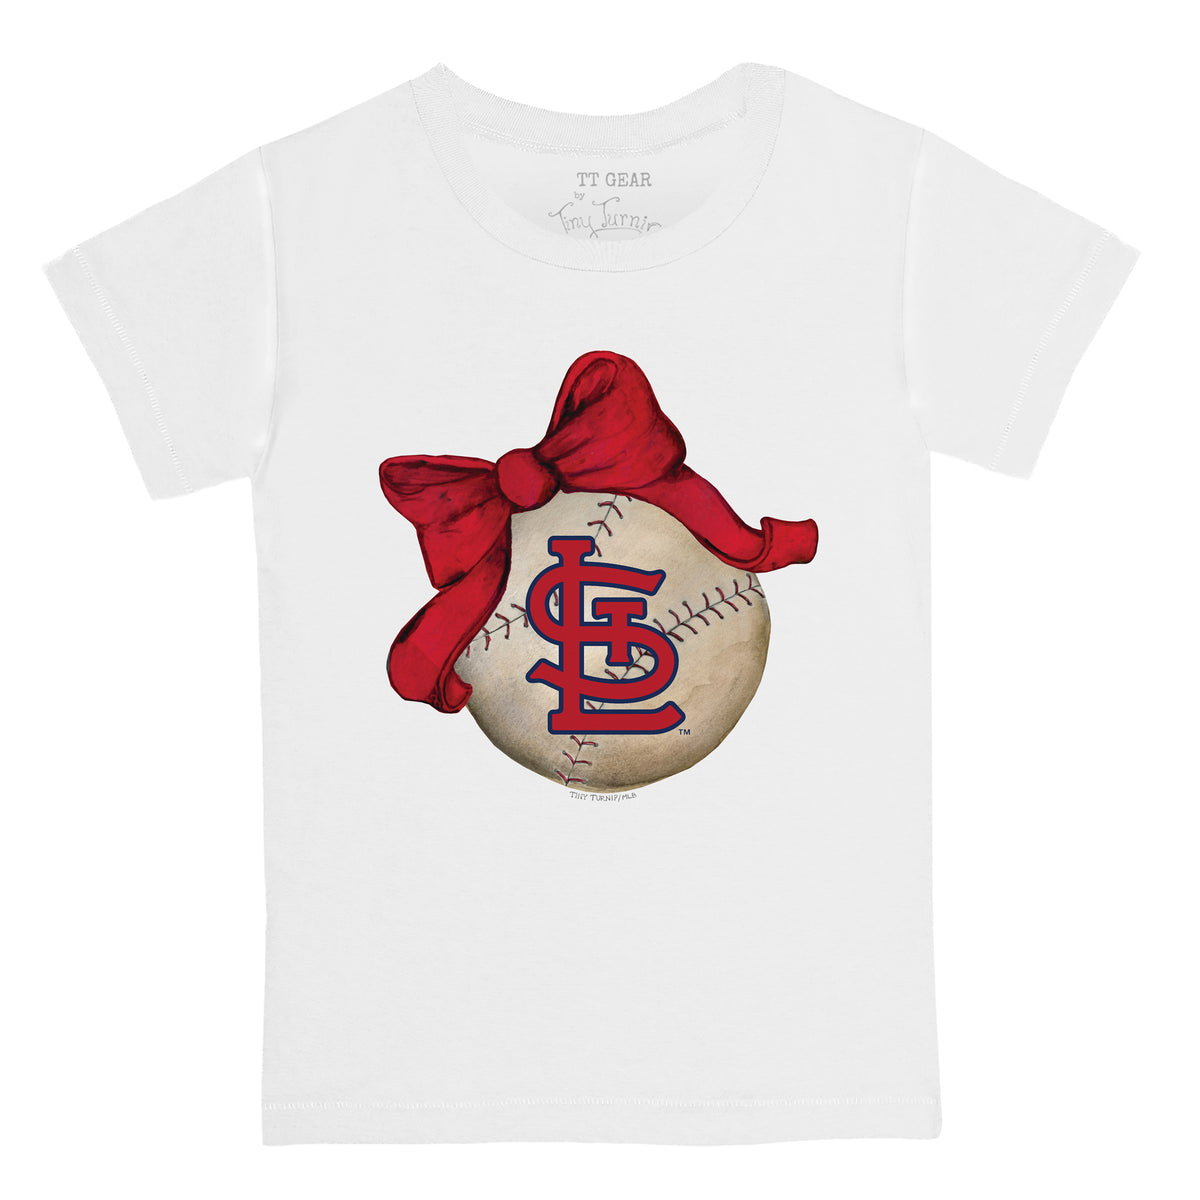 St. Louis Cardinals Personalized Baseball Jersey Shirt 222 - Teeruto